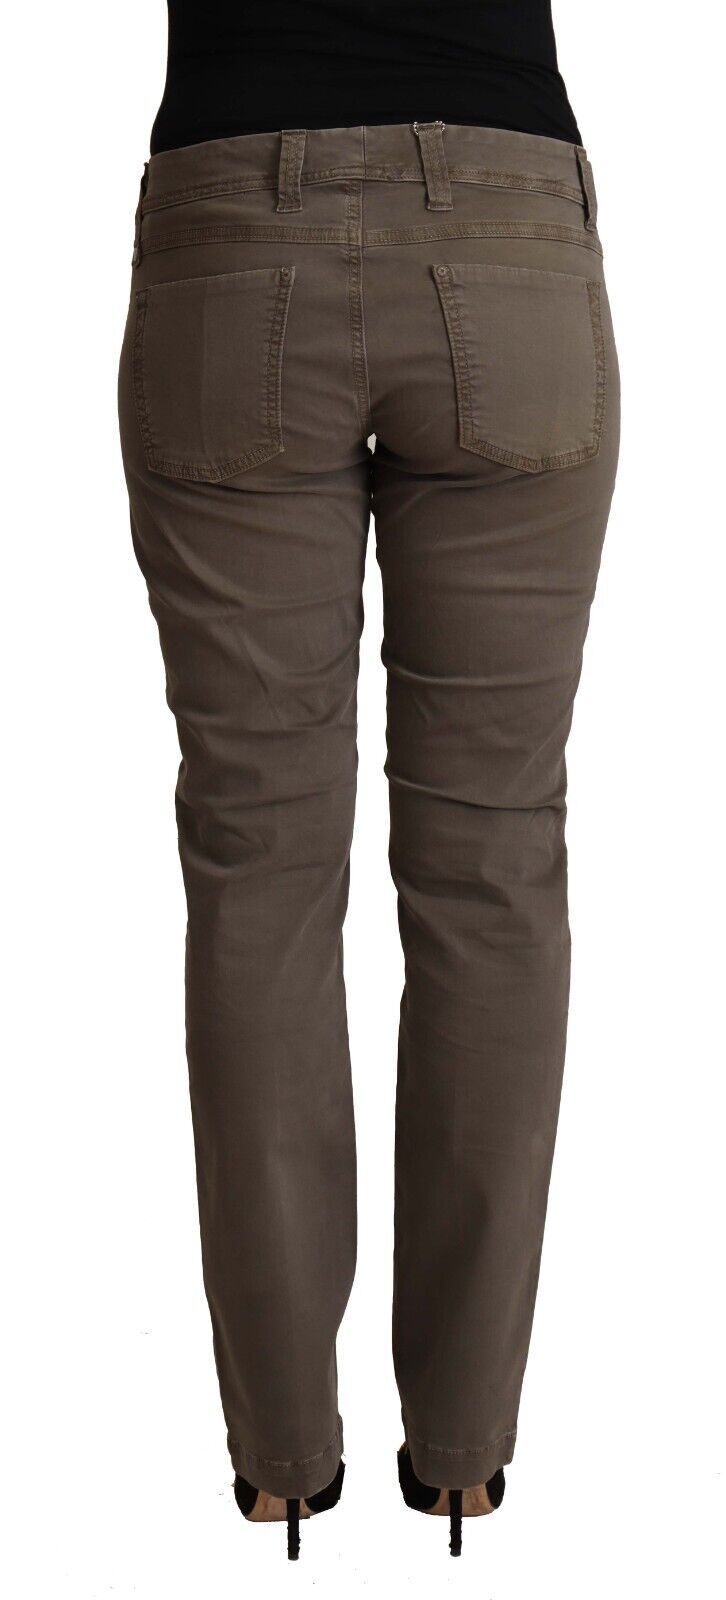 Zyklus braune Baumwolle niedrige Taille Skinny Casual Jeans